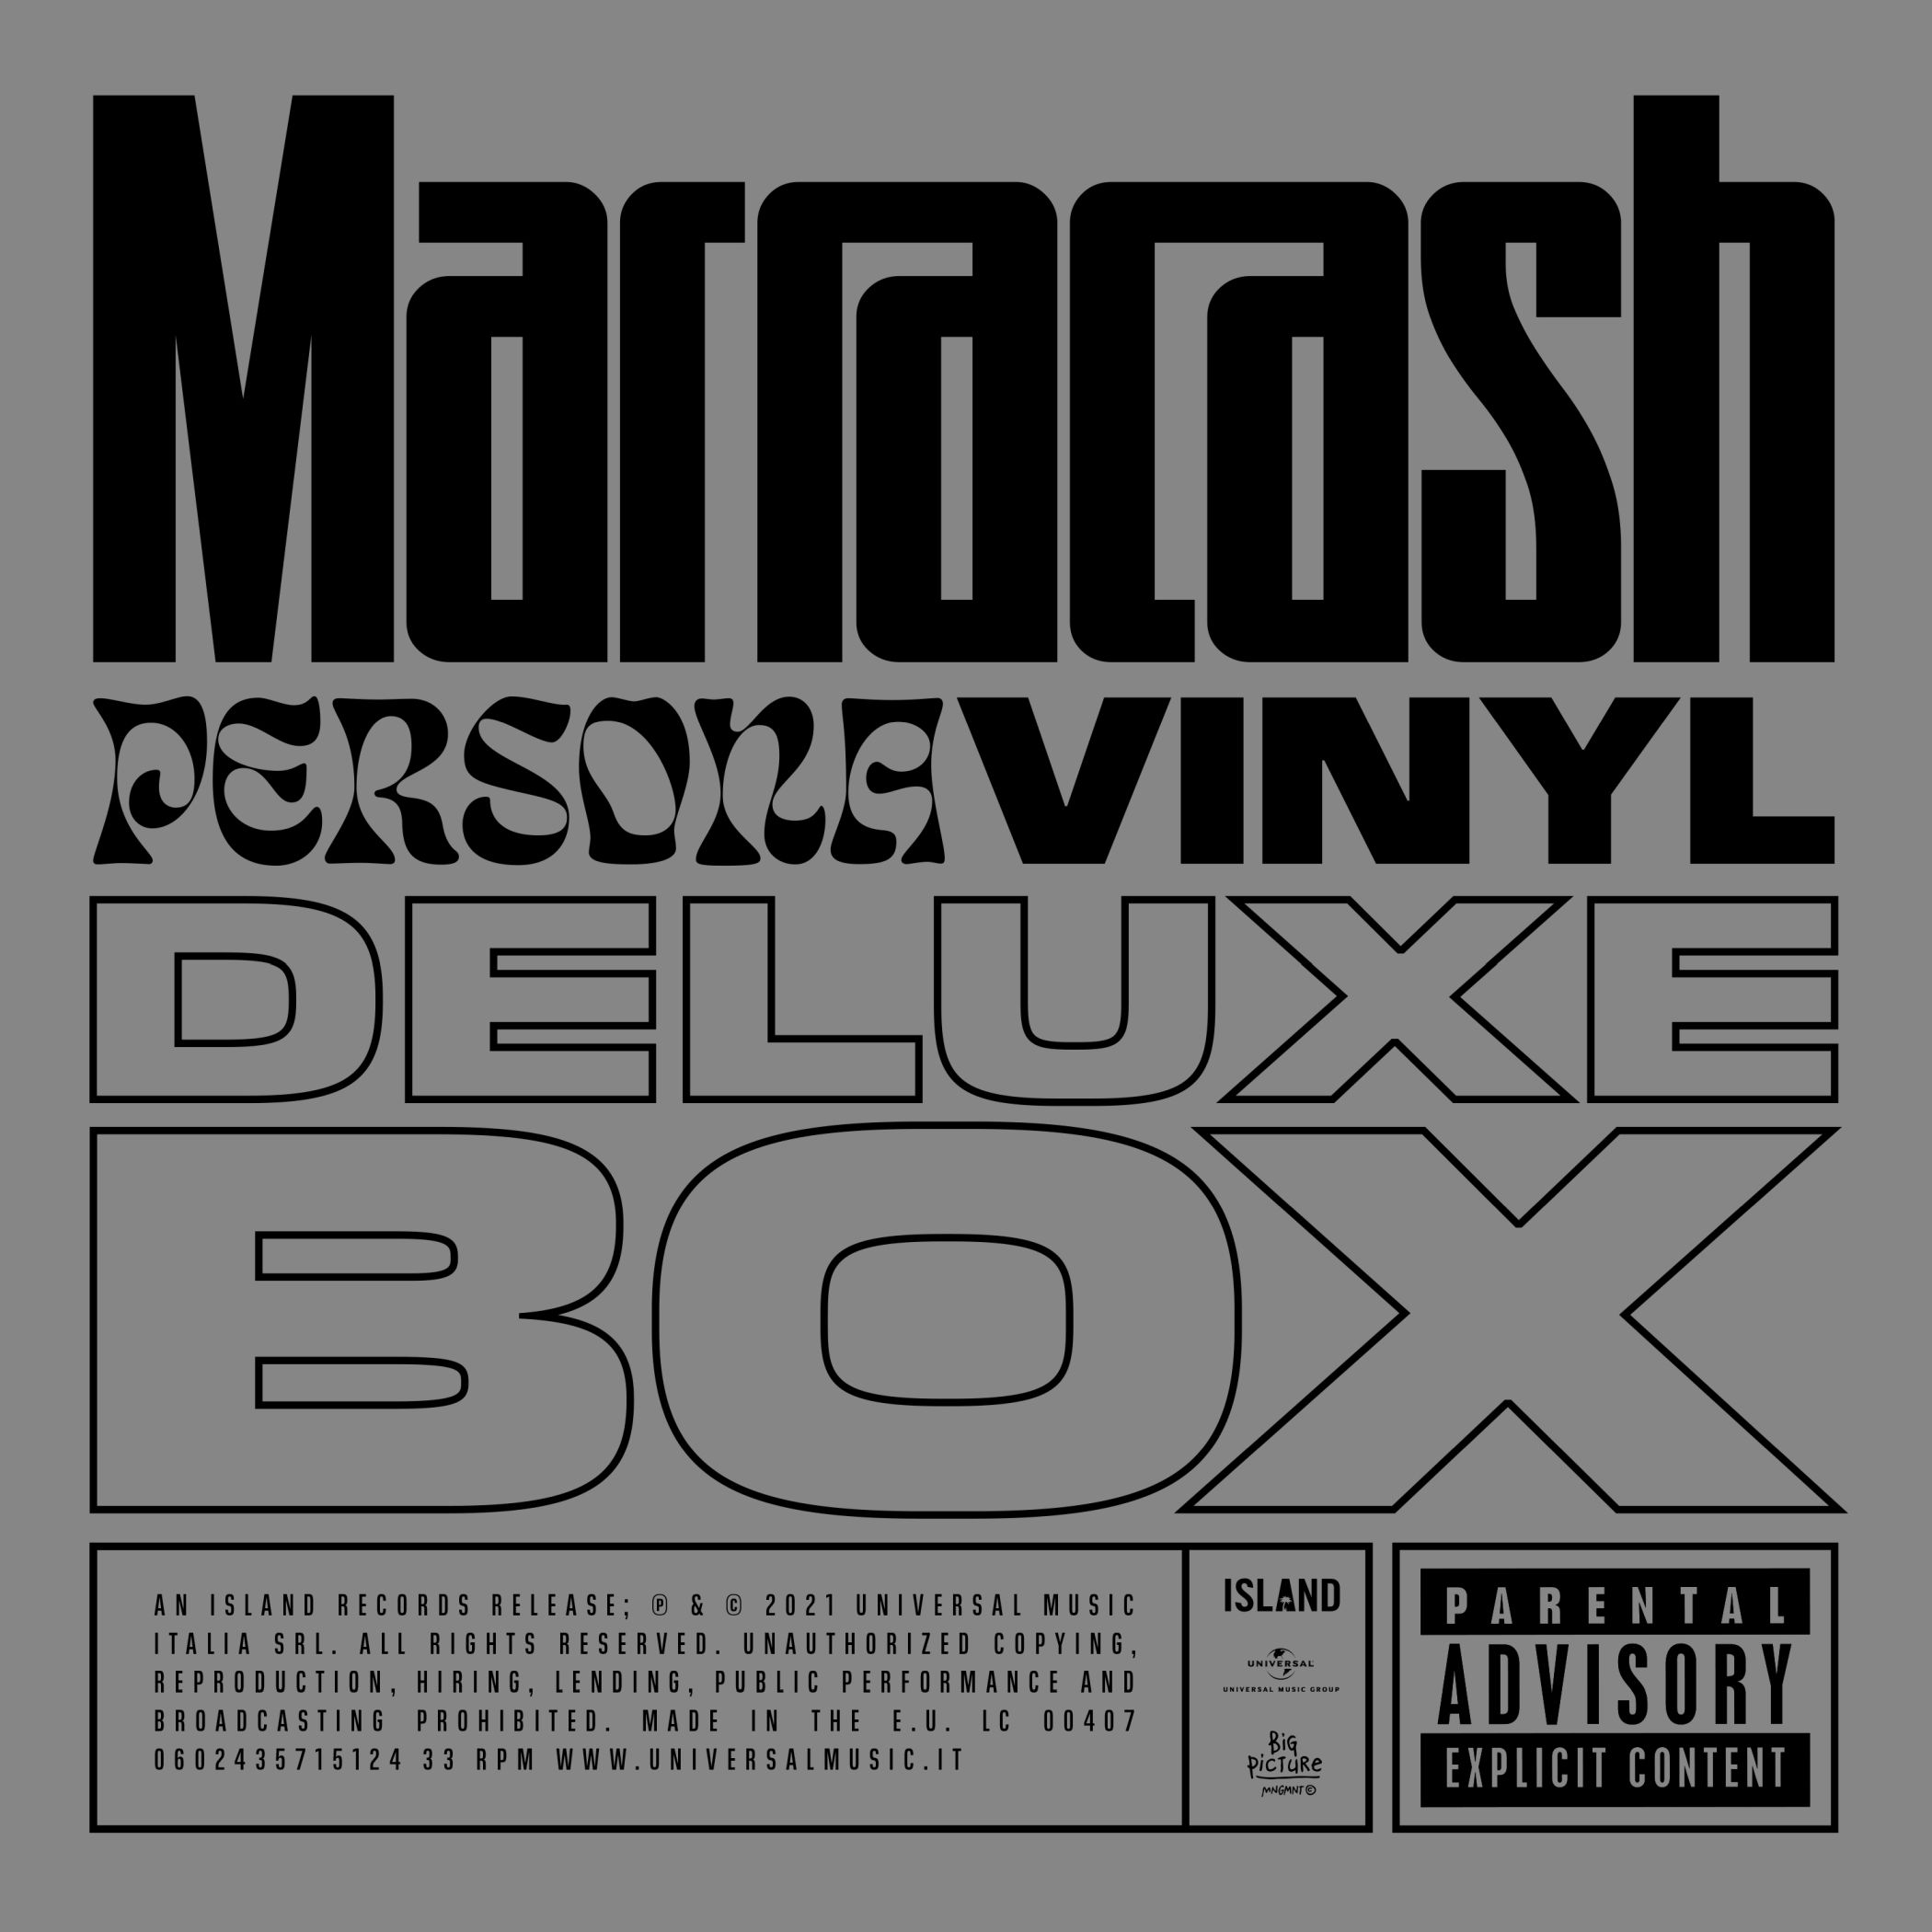 Marracash annuncia Persona - Vinyl Deluxe Box